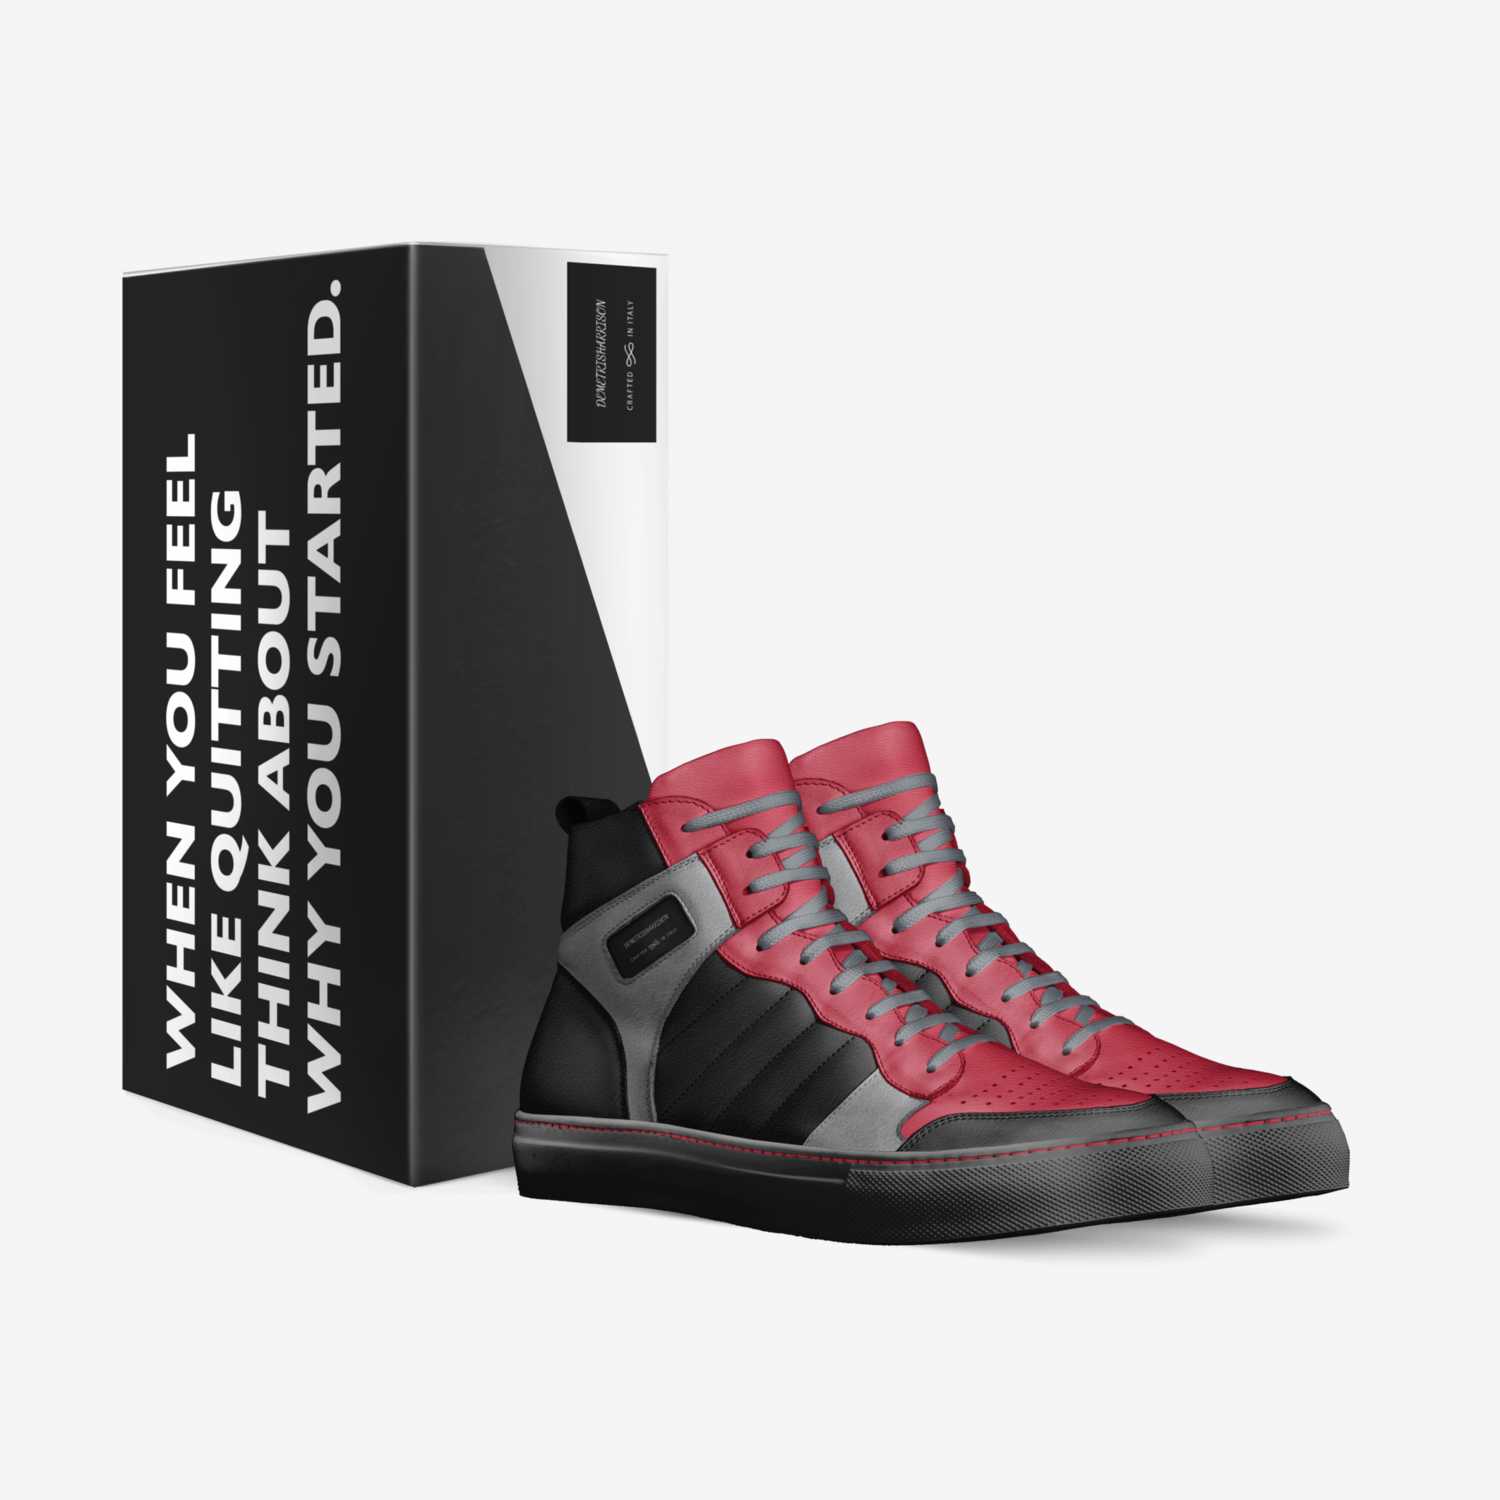 DEMETRISHARRISON custom made in Italy shoes by Demetris Harrison | Box view